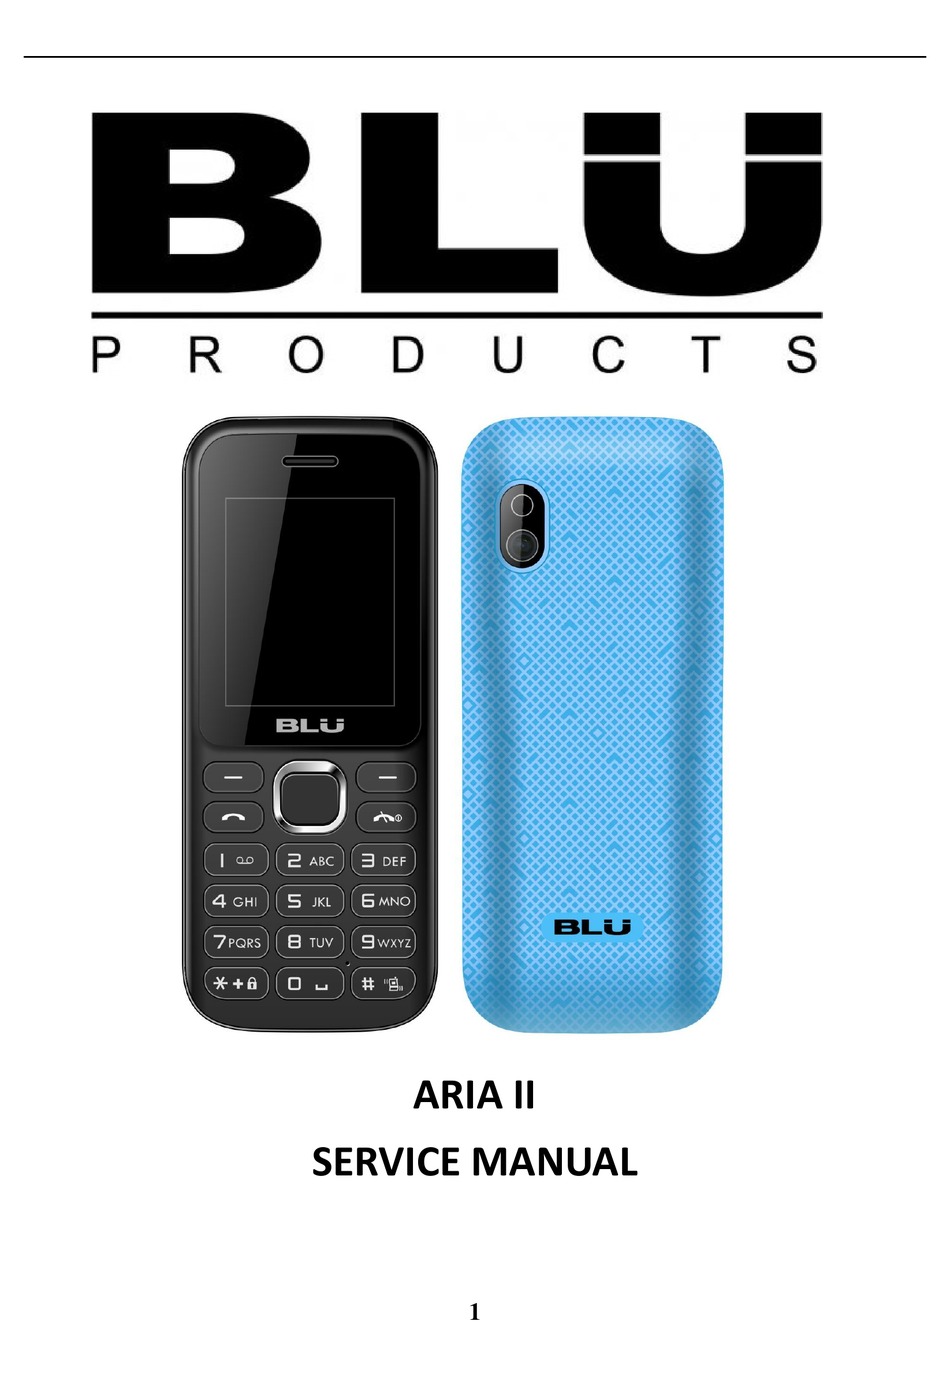 BLU ARIA II SERVICE MANUAL Pdf Download | ManualsLib